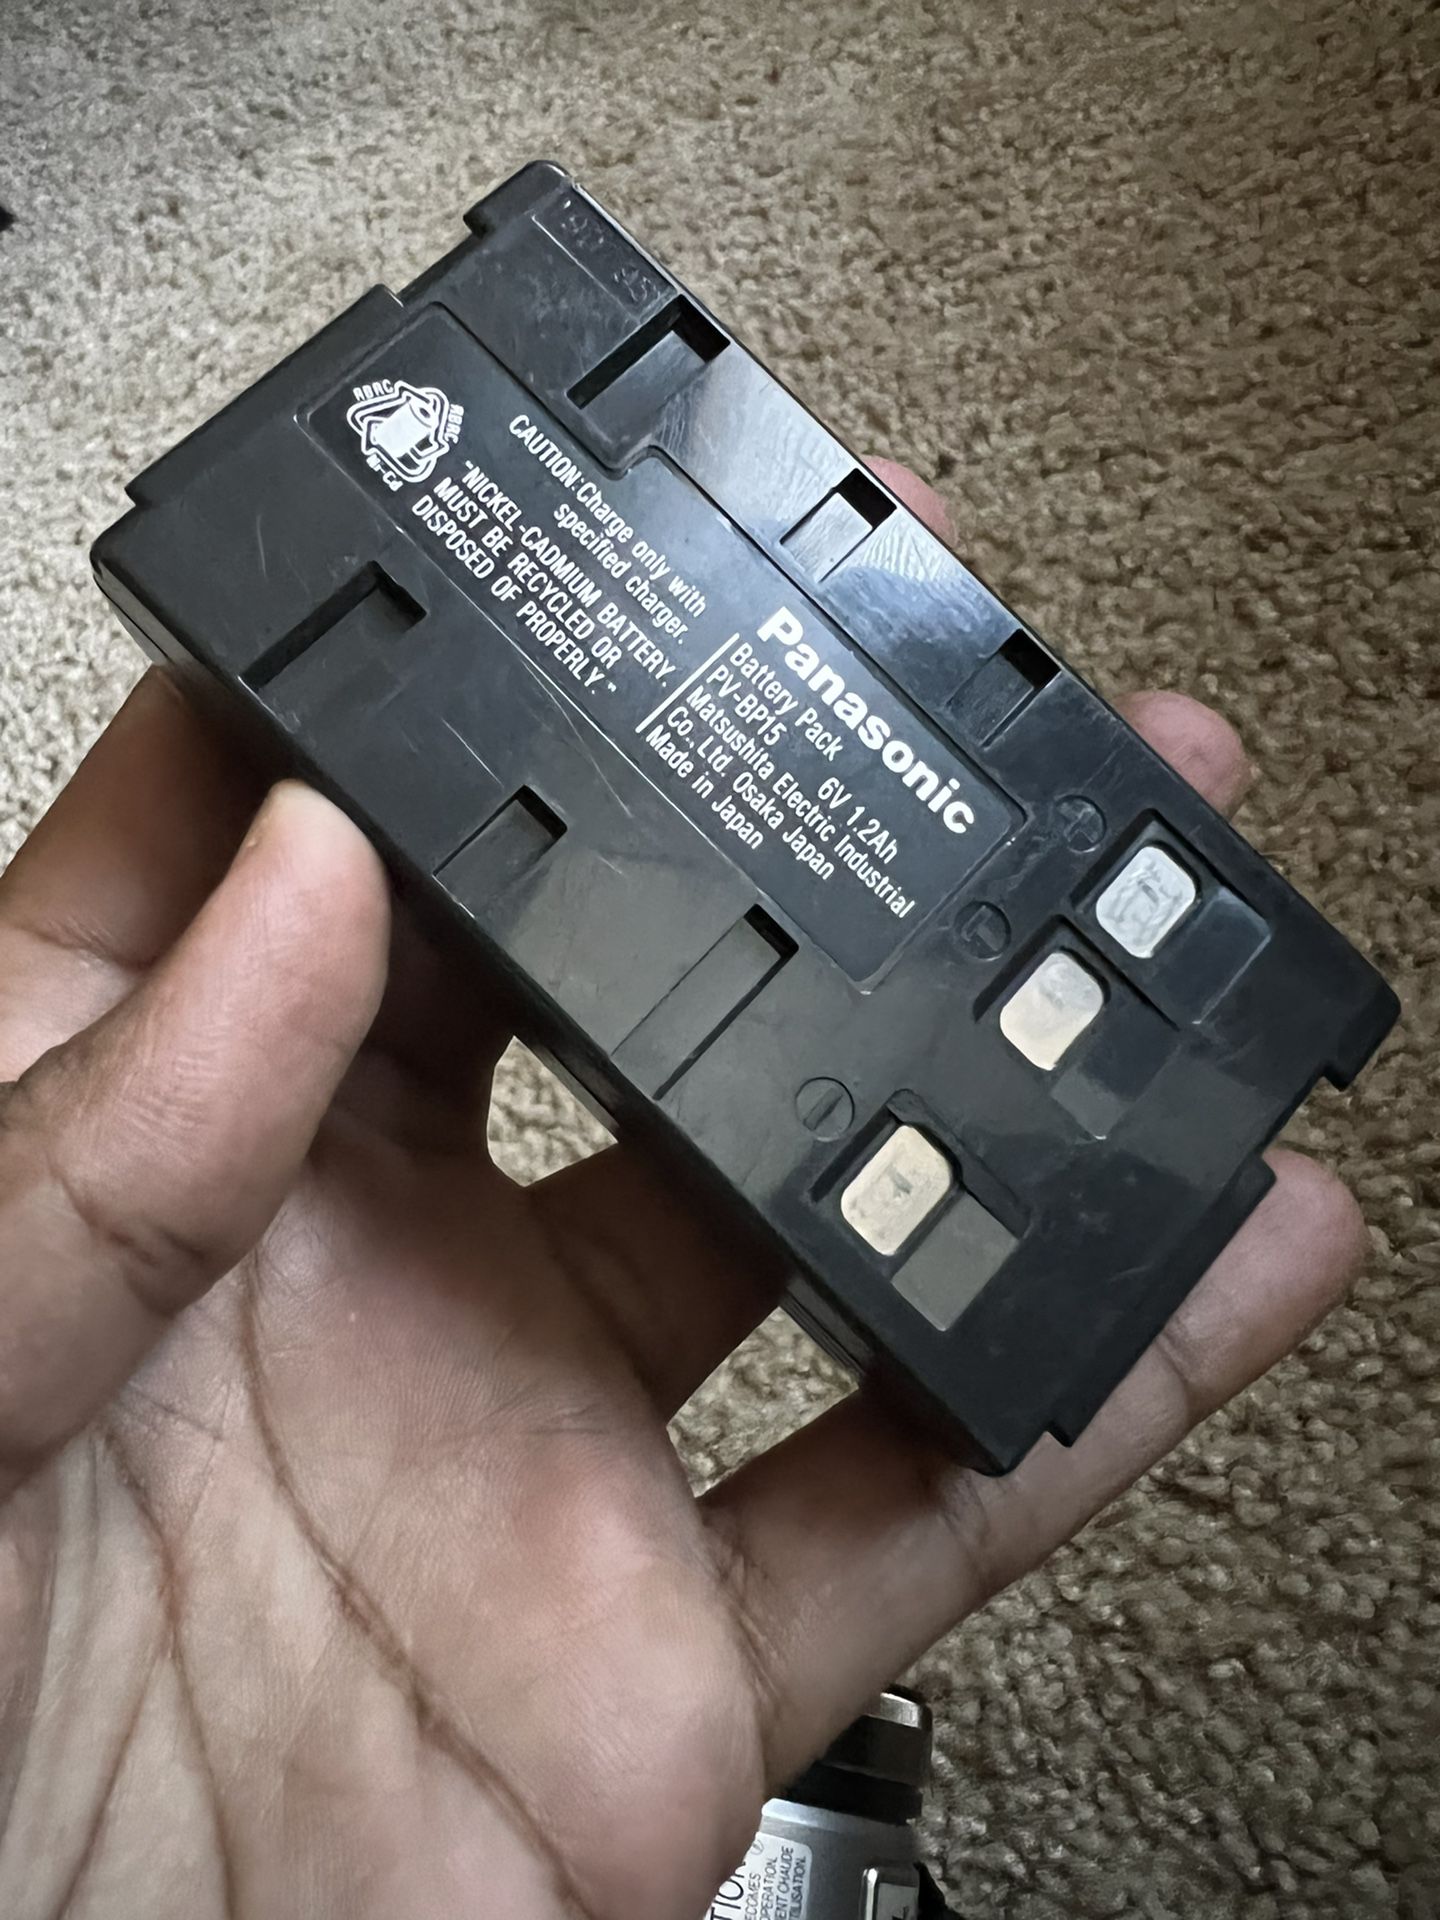 Panasonic VHS palmcorder with photoshot